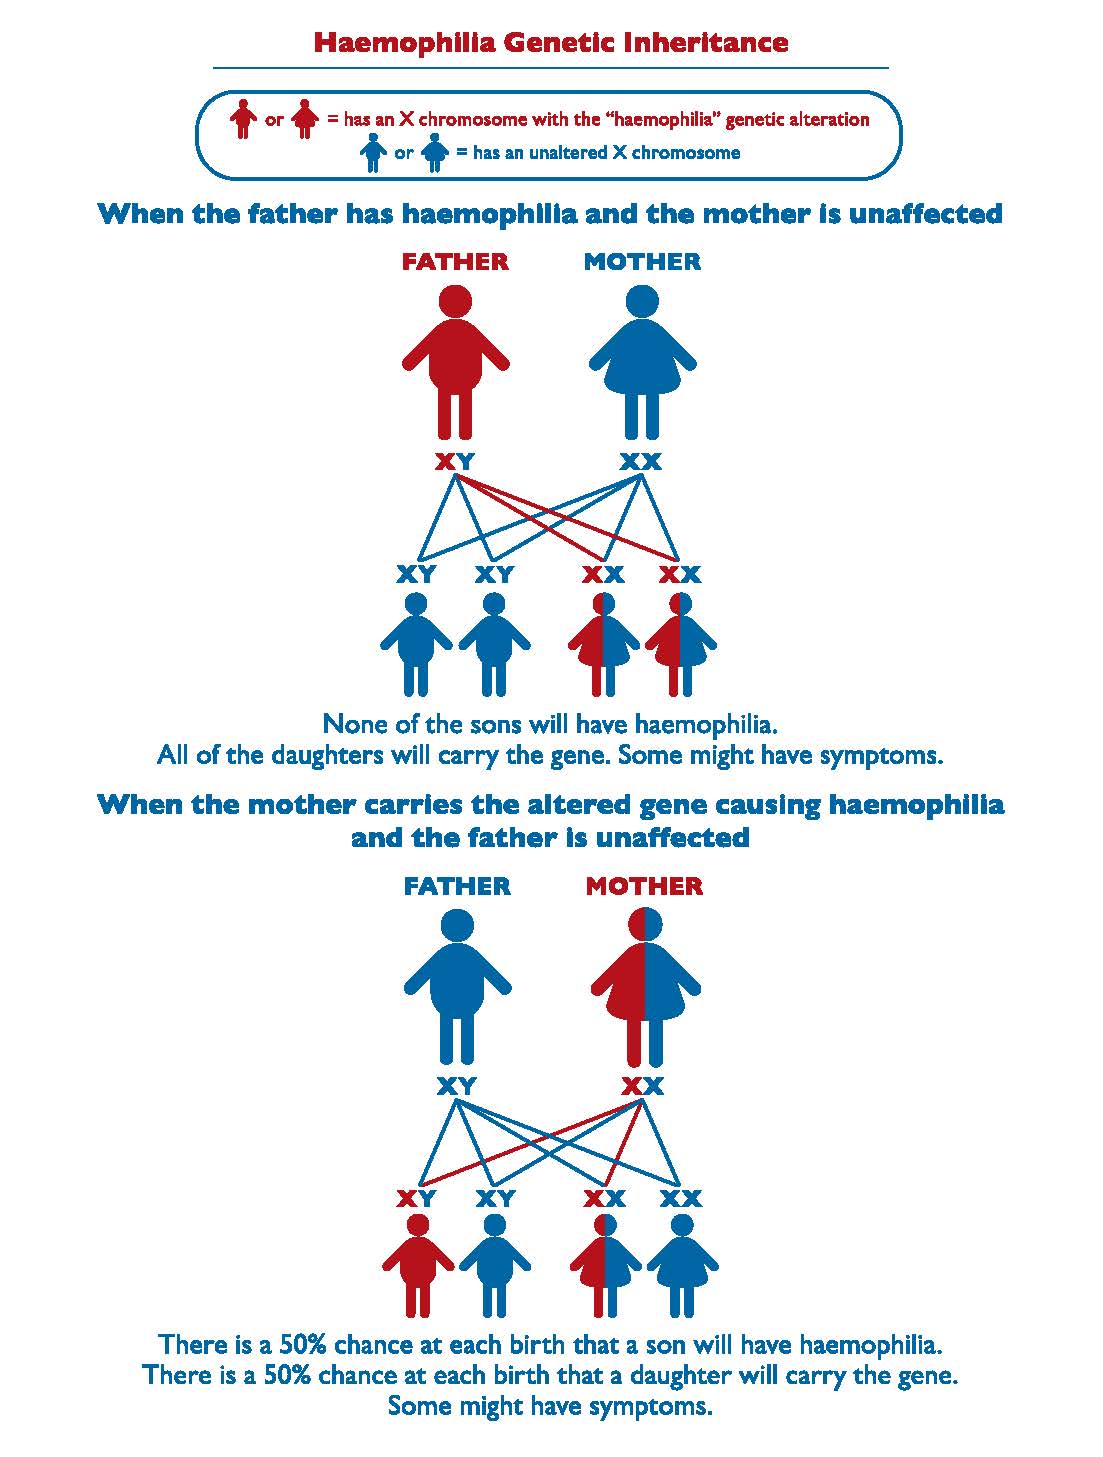 haemophilia-genetic-inheritance-diagram-2013-higher-res.jpg